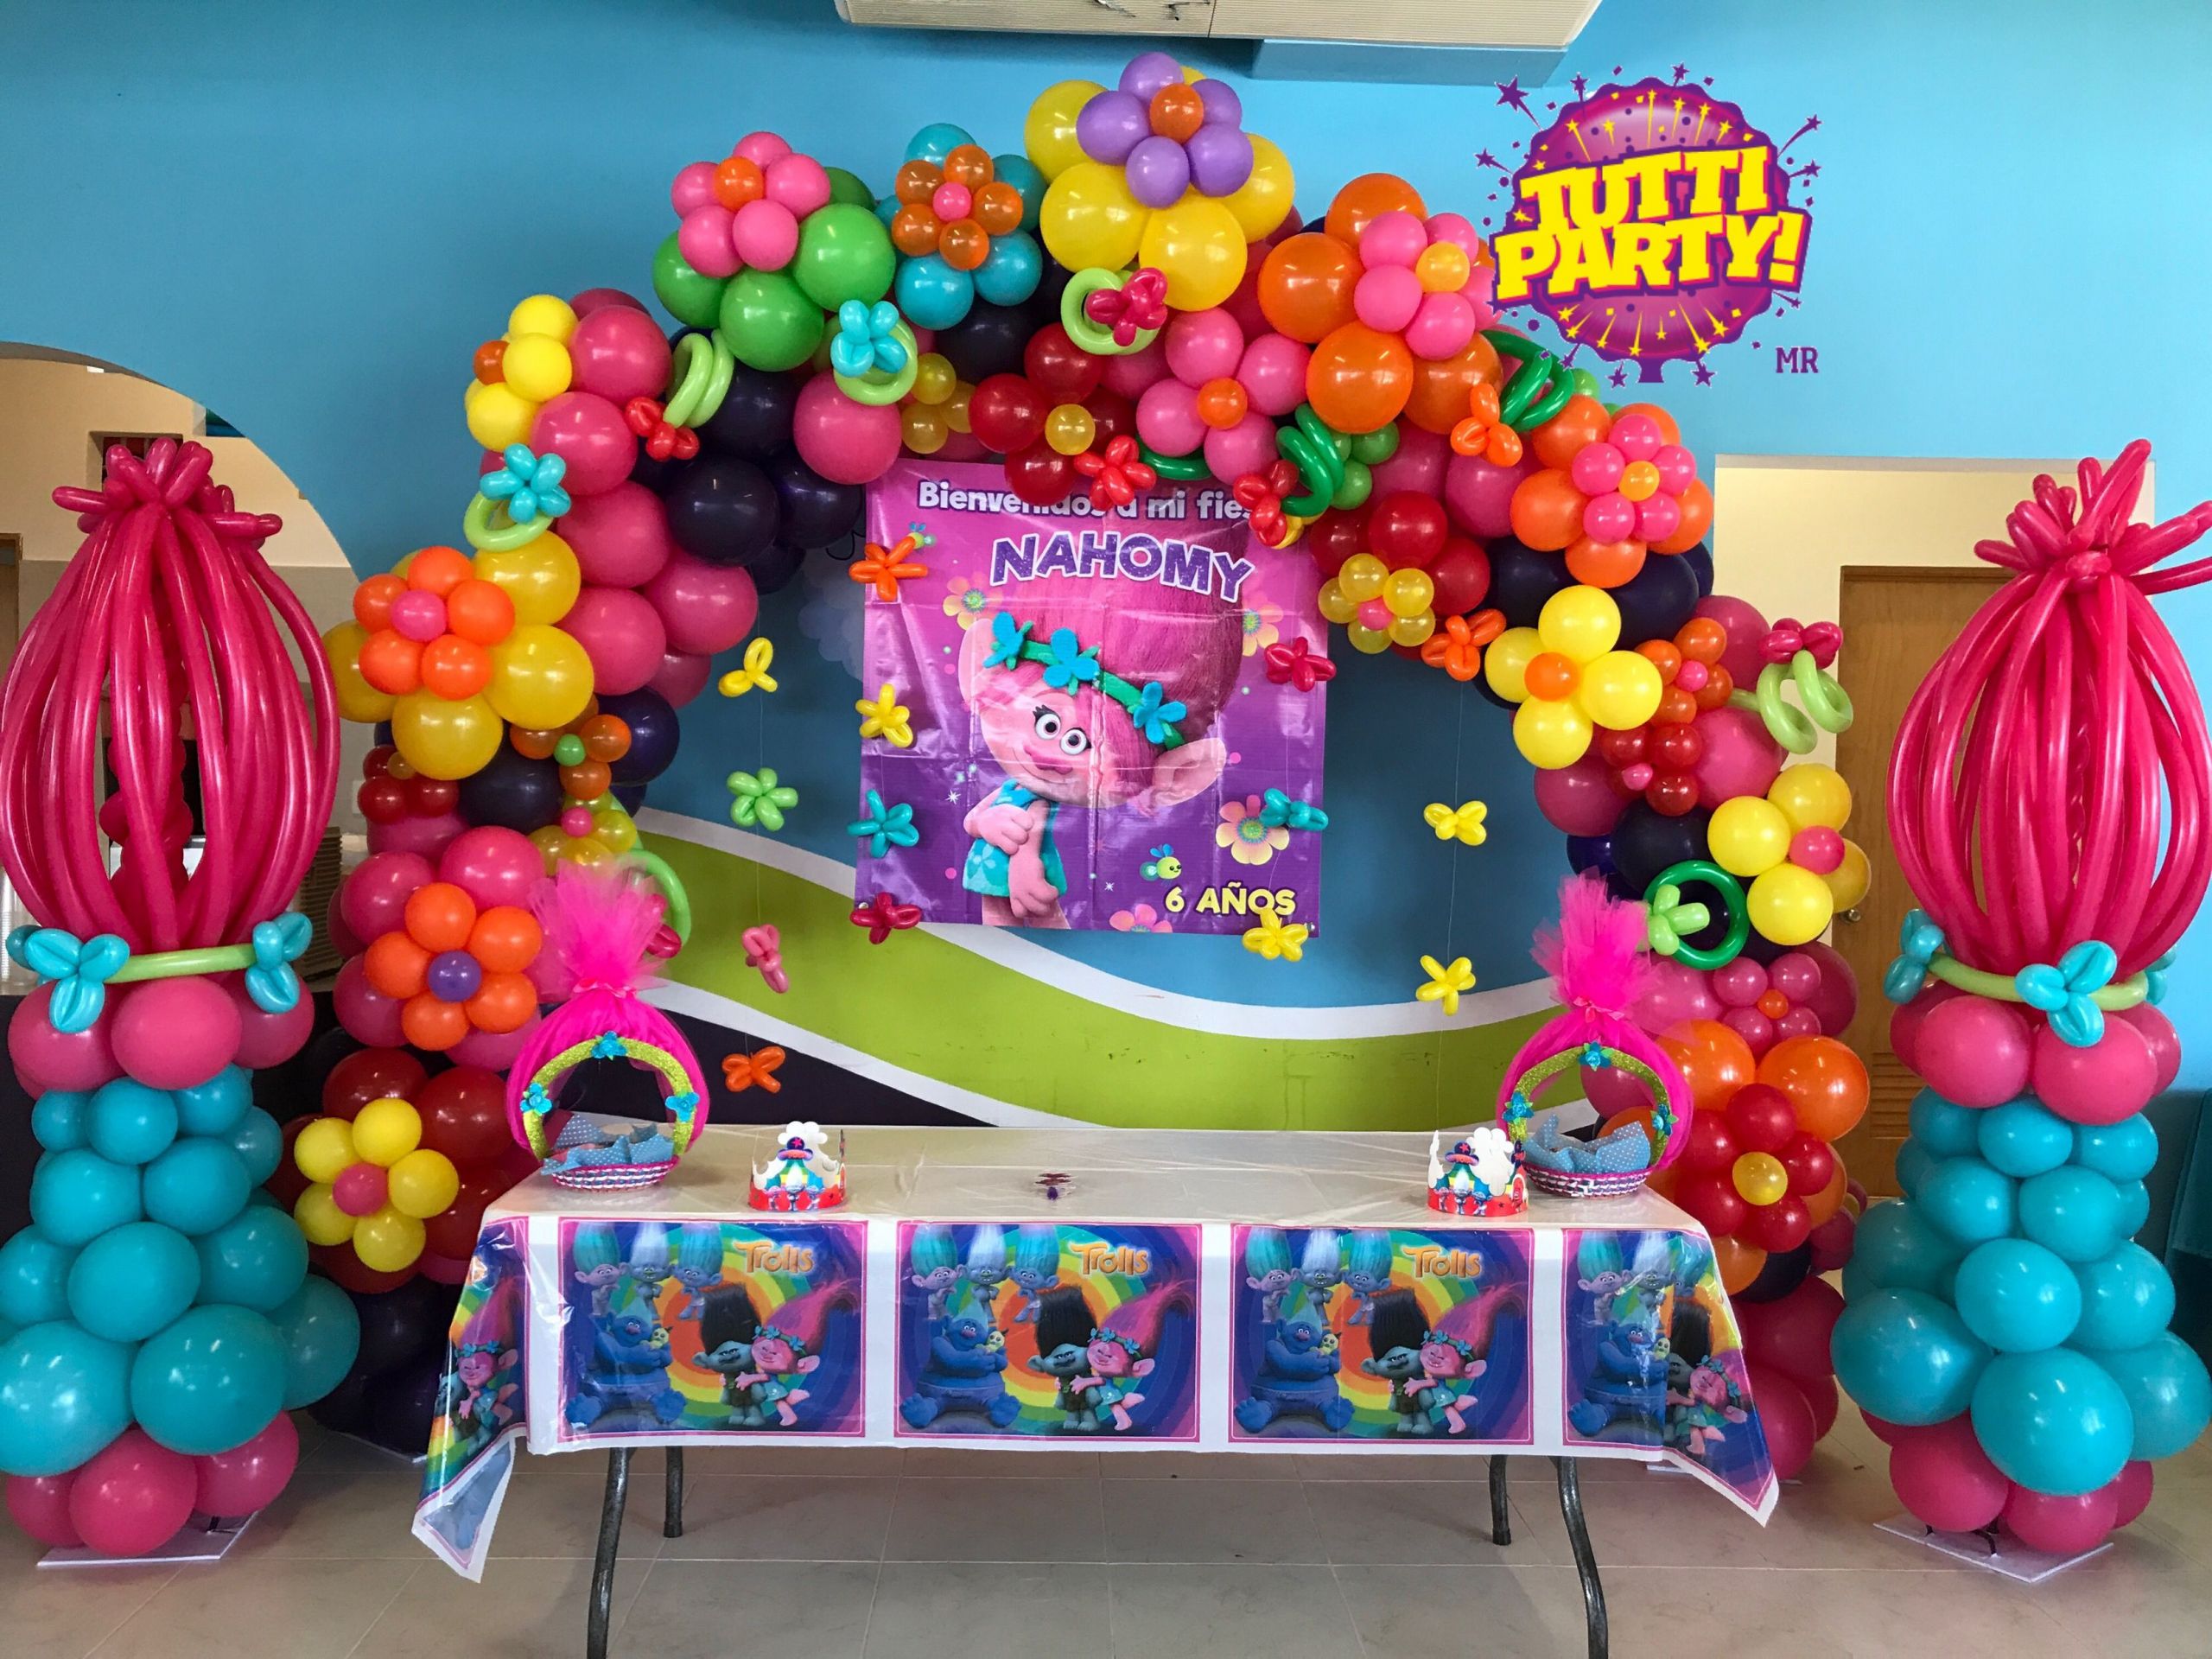 Poppy Troll Party Ideas
 Poppy party Poppy trolls party decorations balloons party